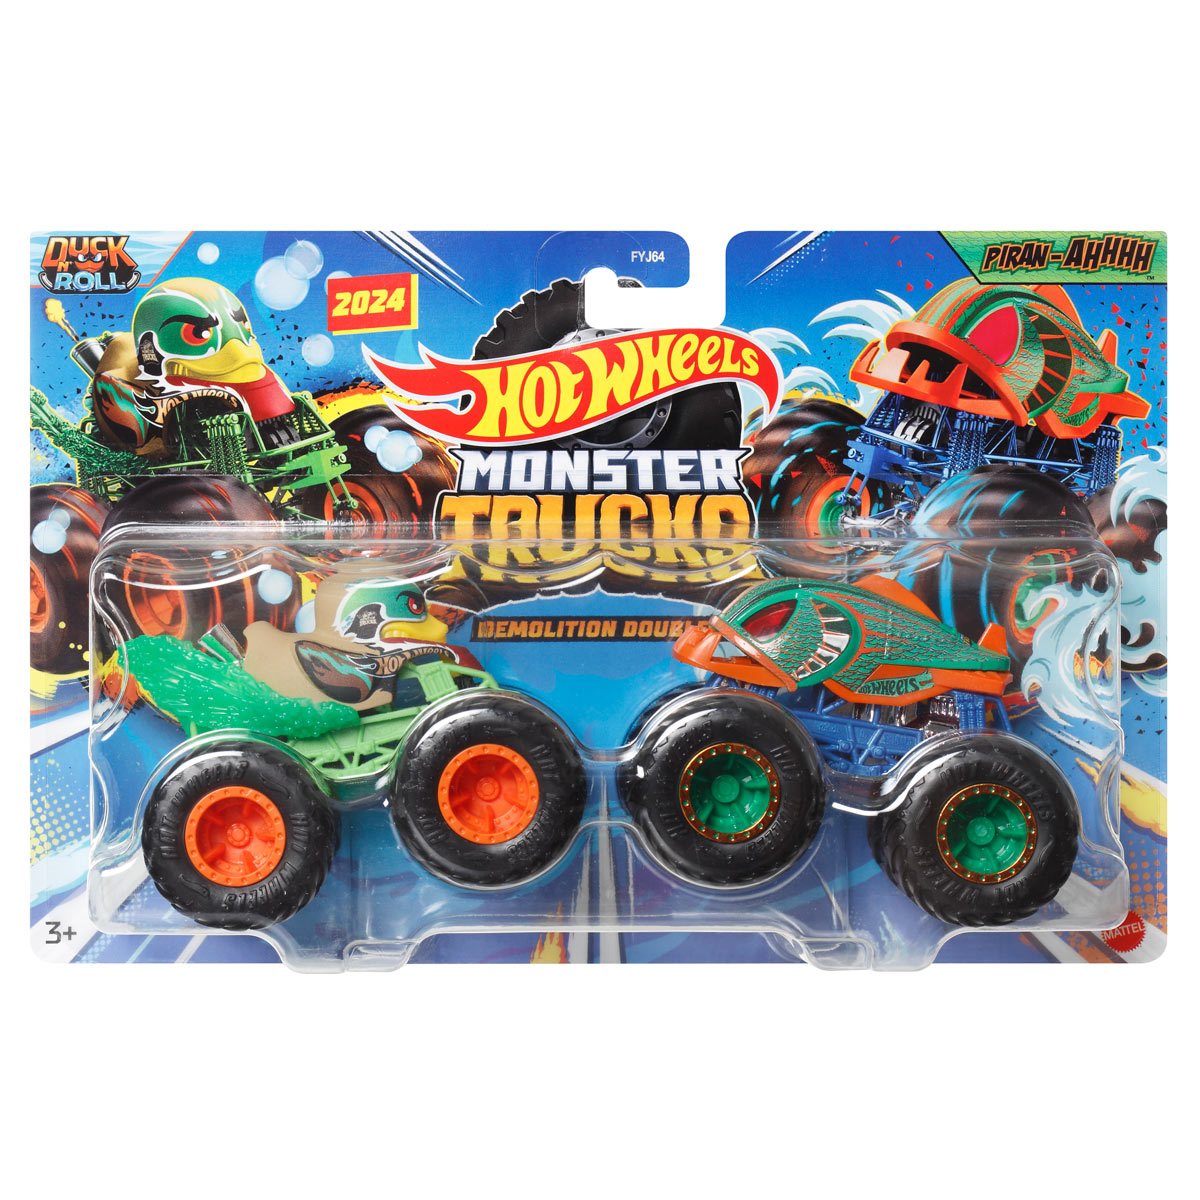 Hot wheels Monster Trucks 1:64 4 Assorted Pack Multicolor